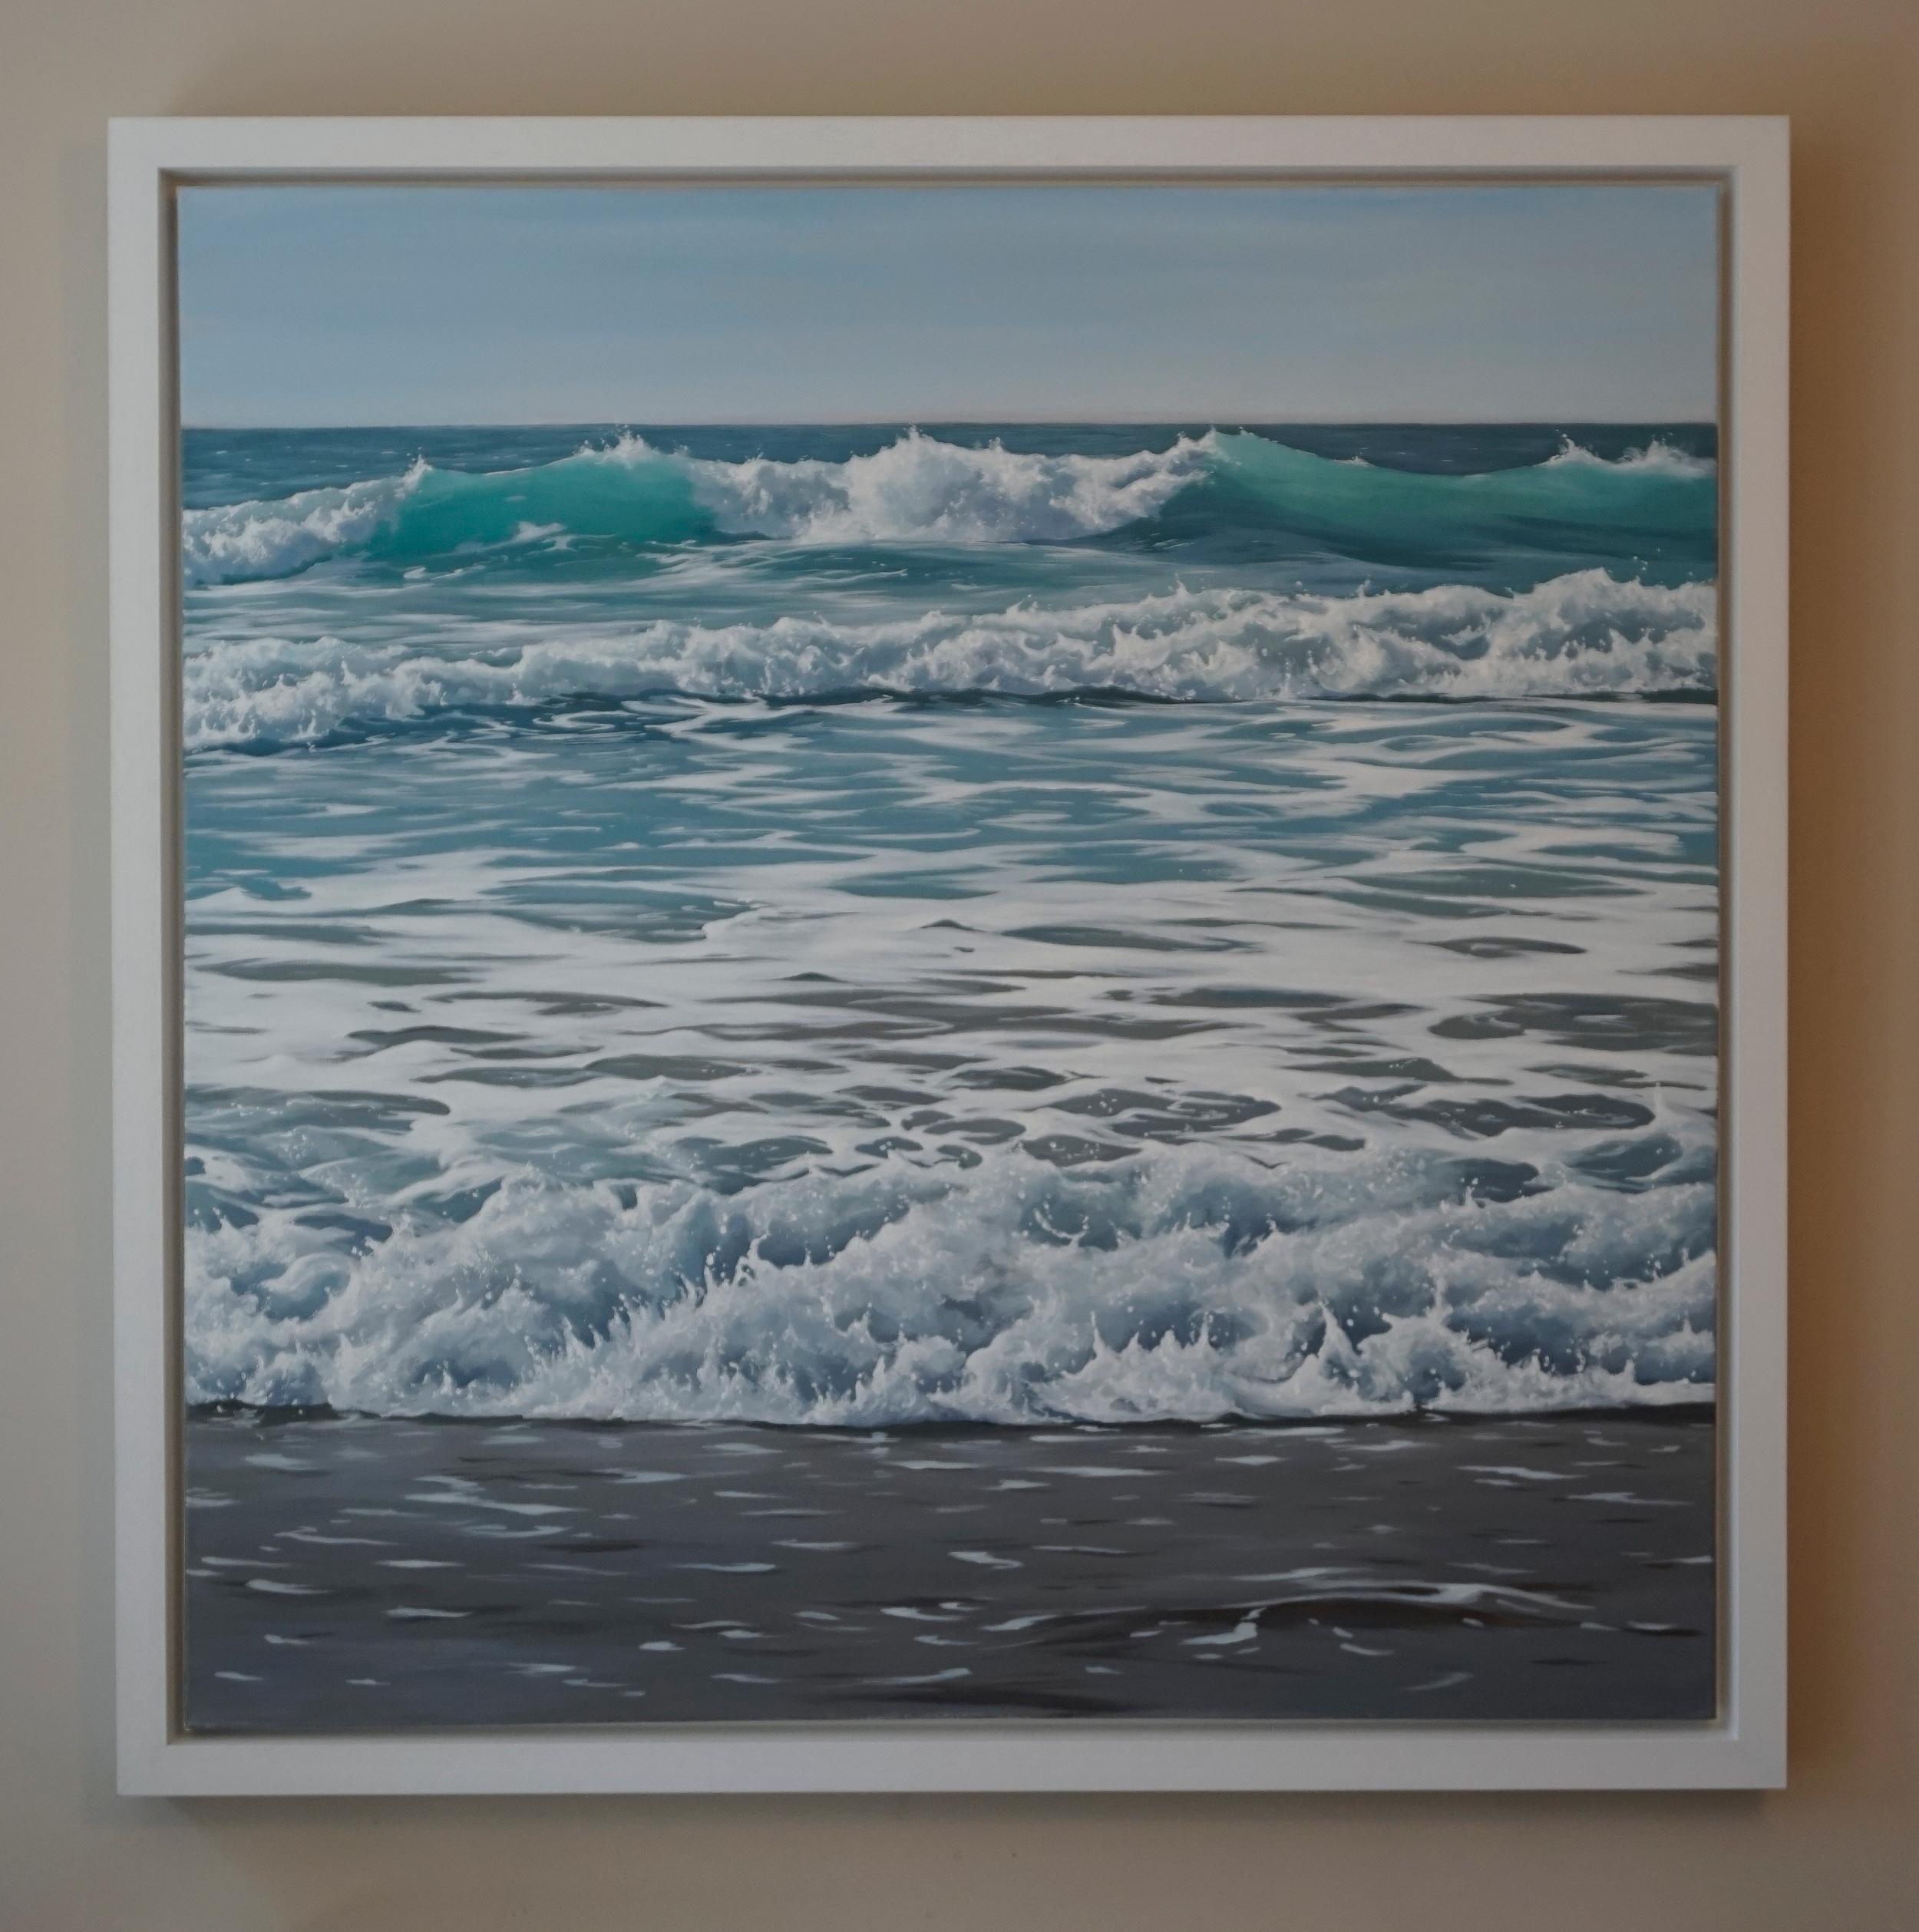 Breaking Waves Ozeankunst, zeitgenössisches realistisches Meereslandschaftsgemälde, Strandhauskunst (Fotorealismus), Painting, von Jo Quigley